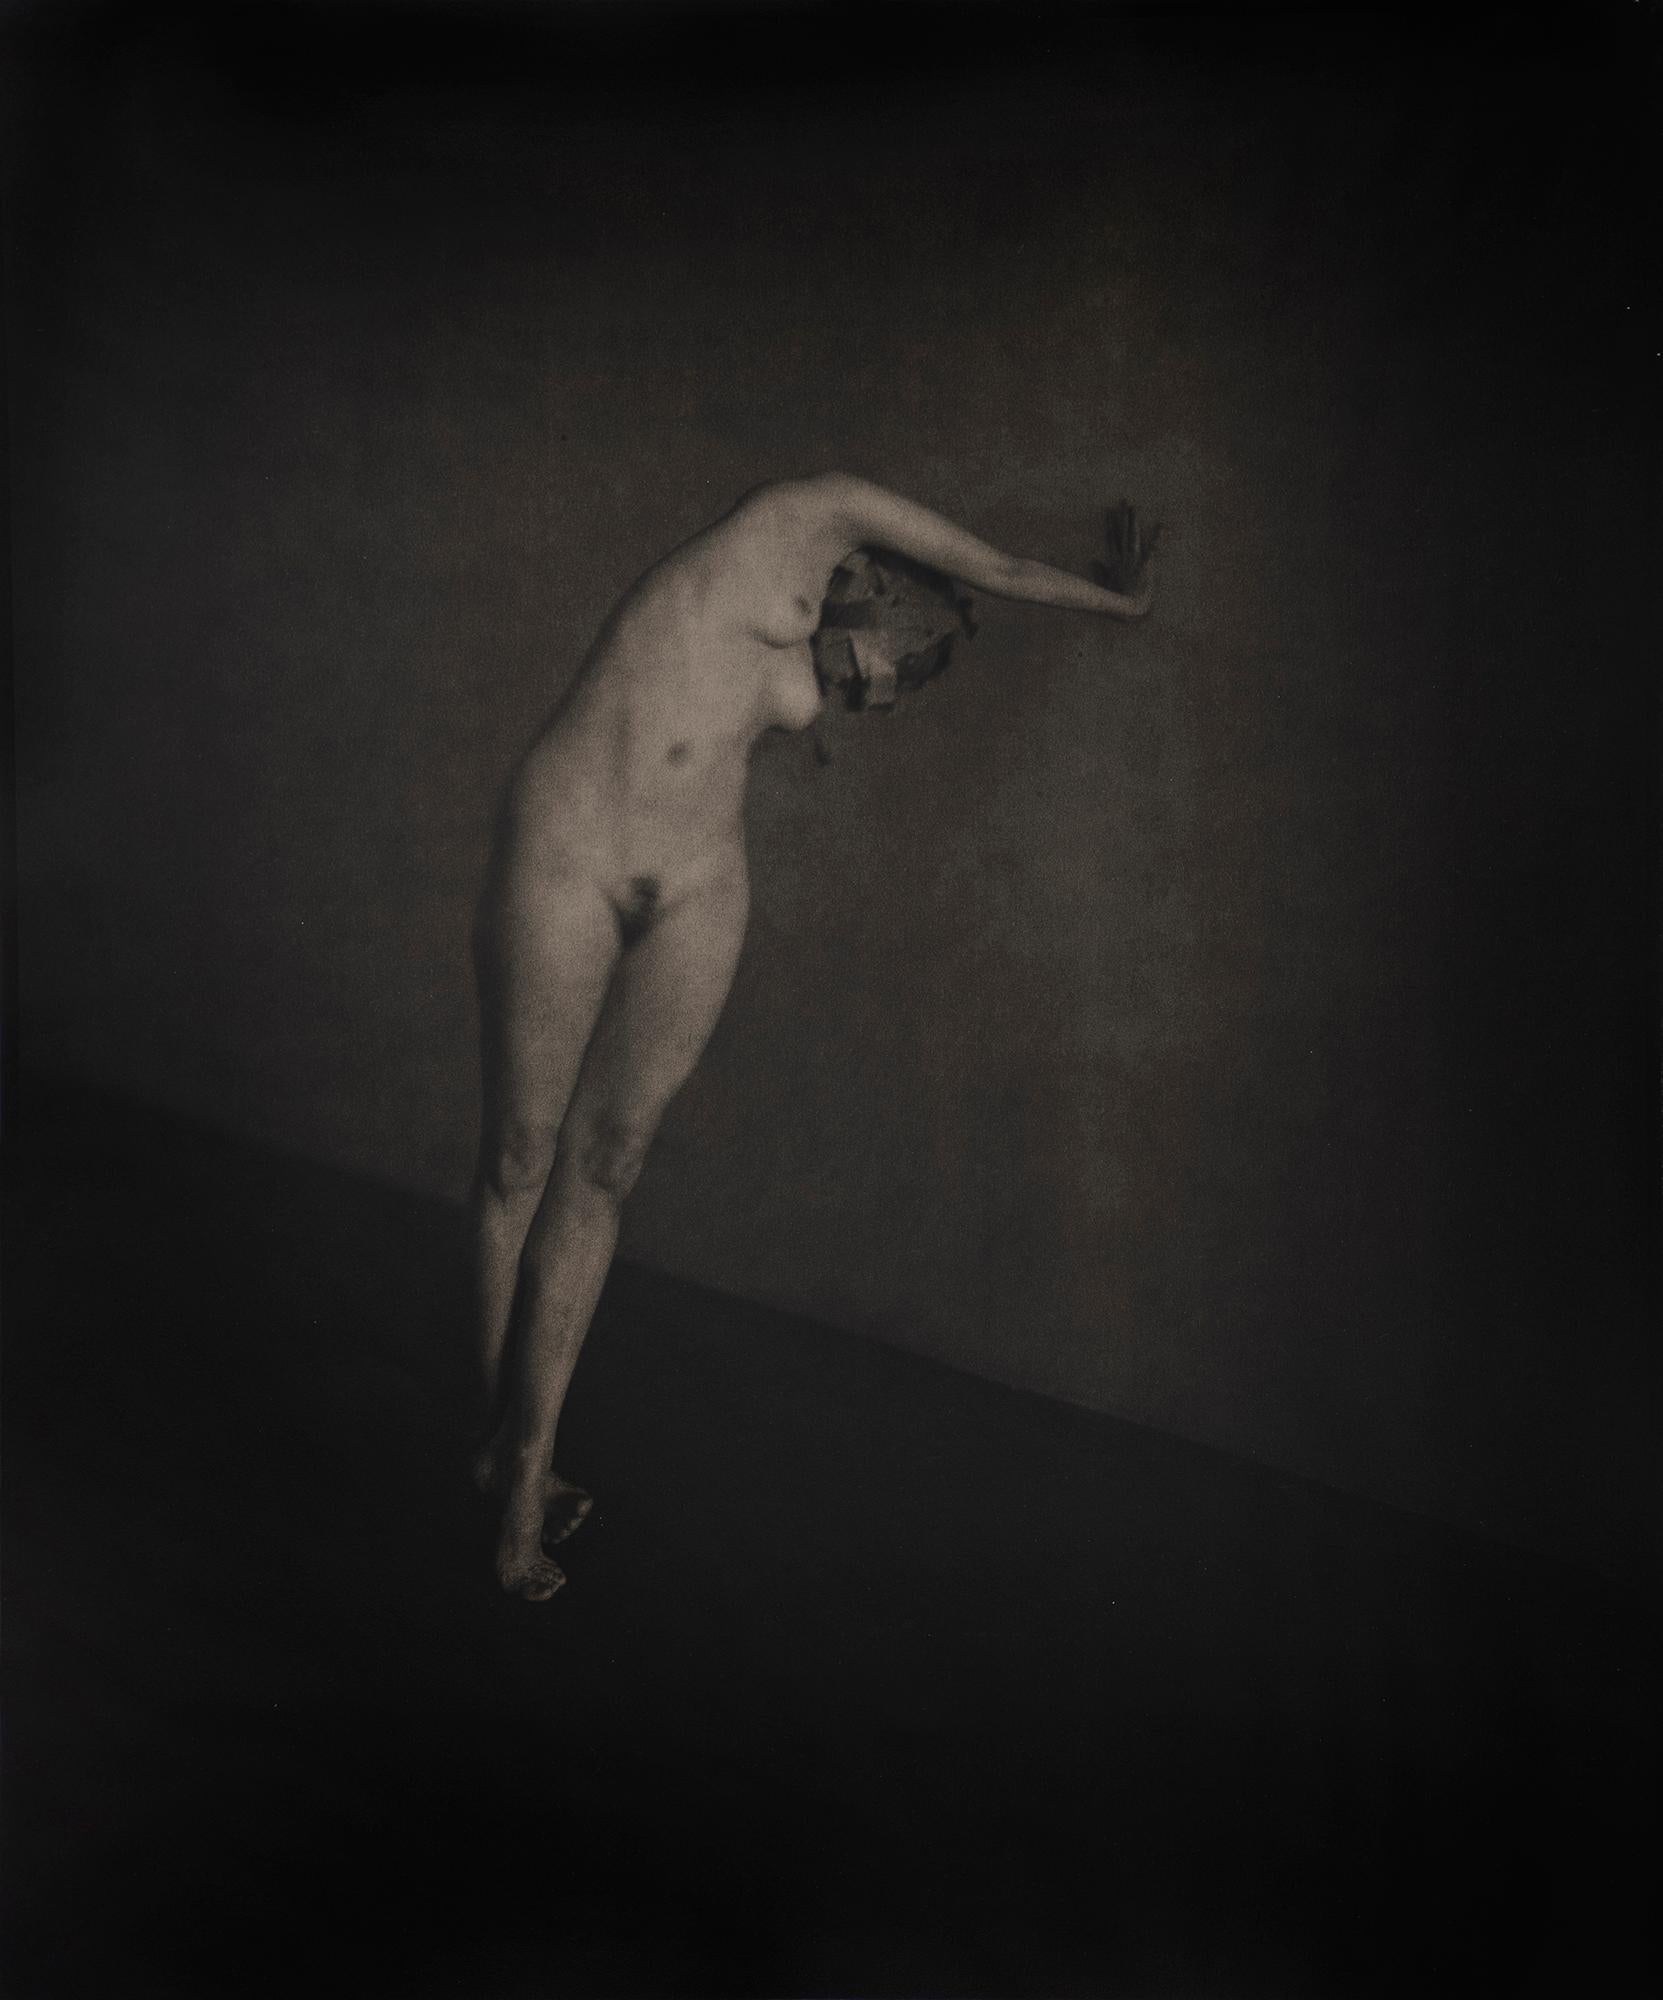 John Casado Nude Photograph - Untitled 20233 - lith silver gelatin print - female figurative nude